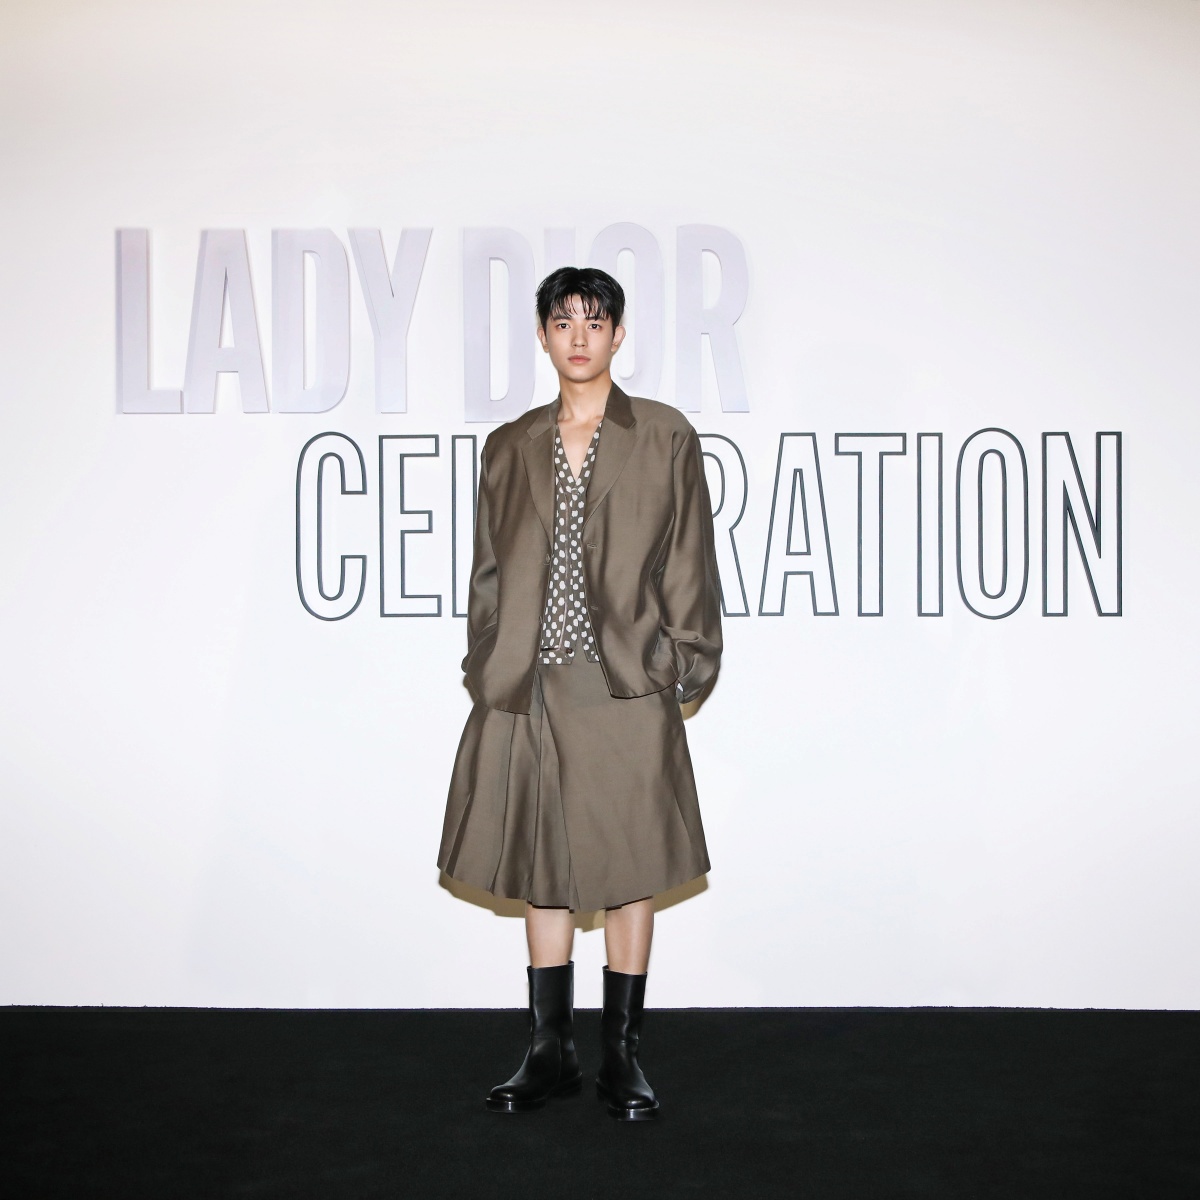 Christian Dior Lady Dior Celebration Seoul